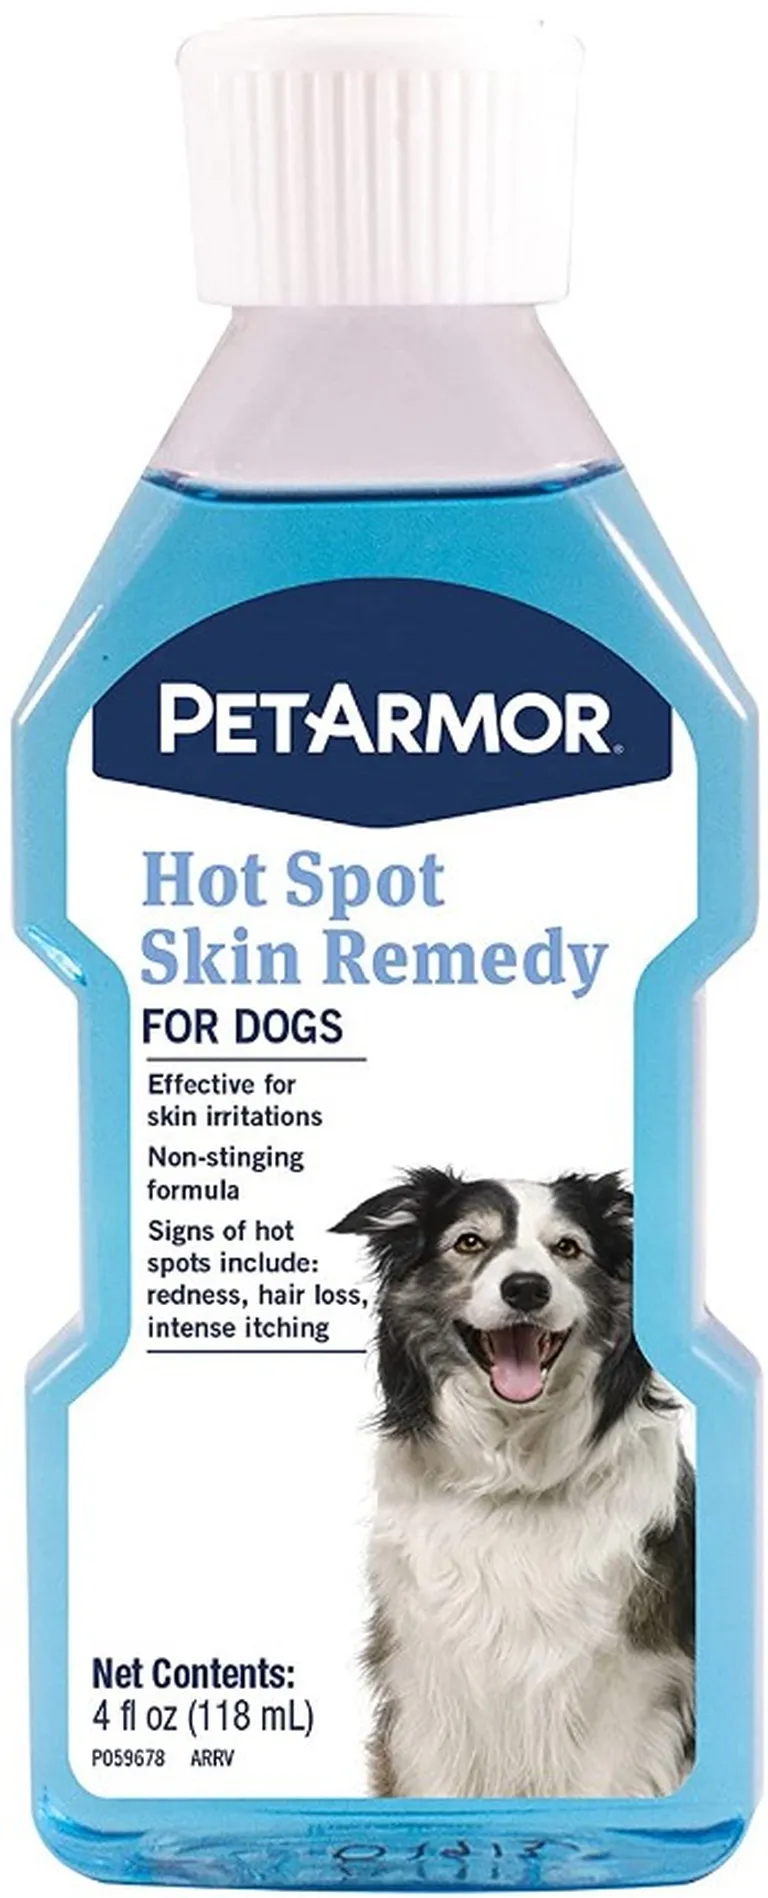 PetArmor Hot Spot Skin Remedy for Dogs Non-Stinging Formula Photo 1